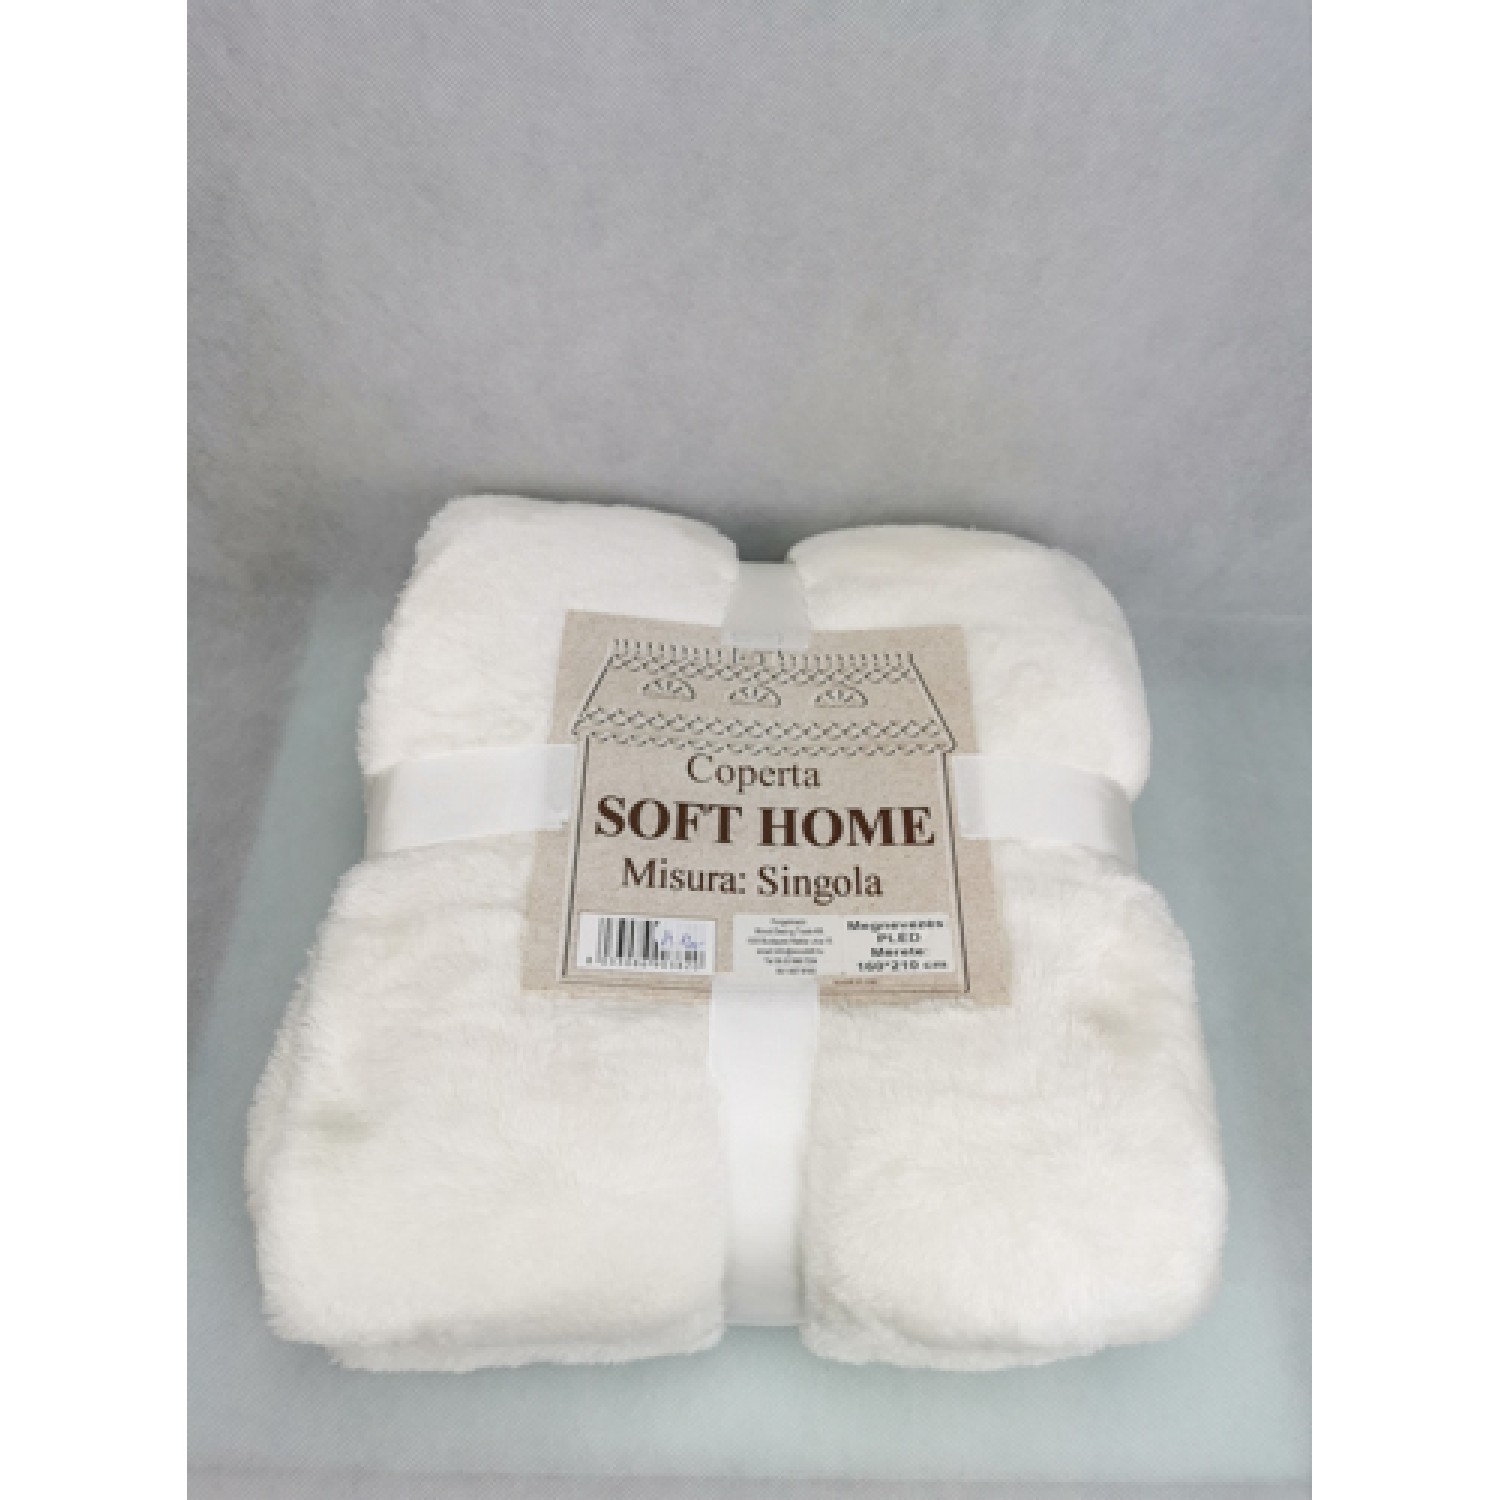 Extra puha takaró "Soft Home White"